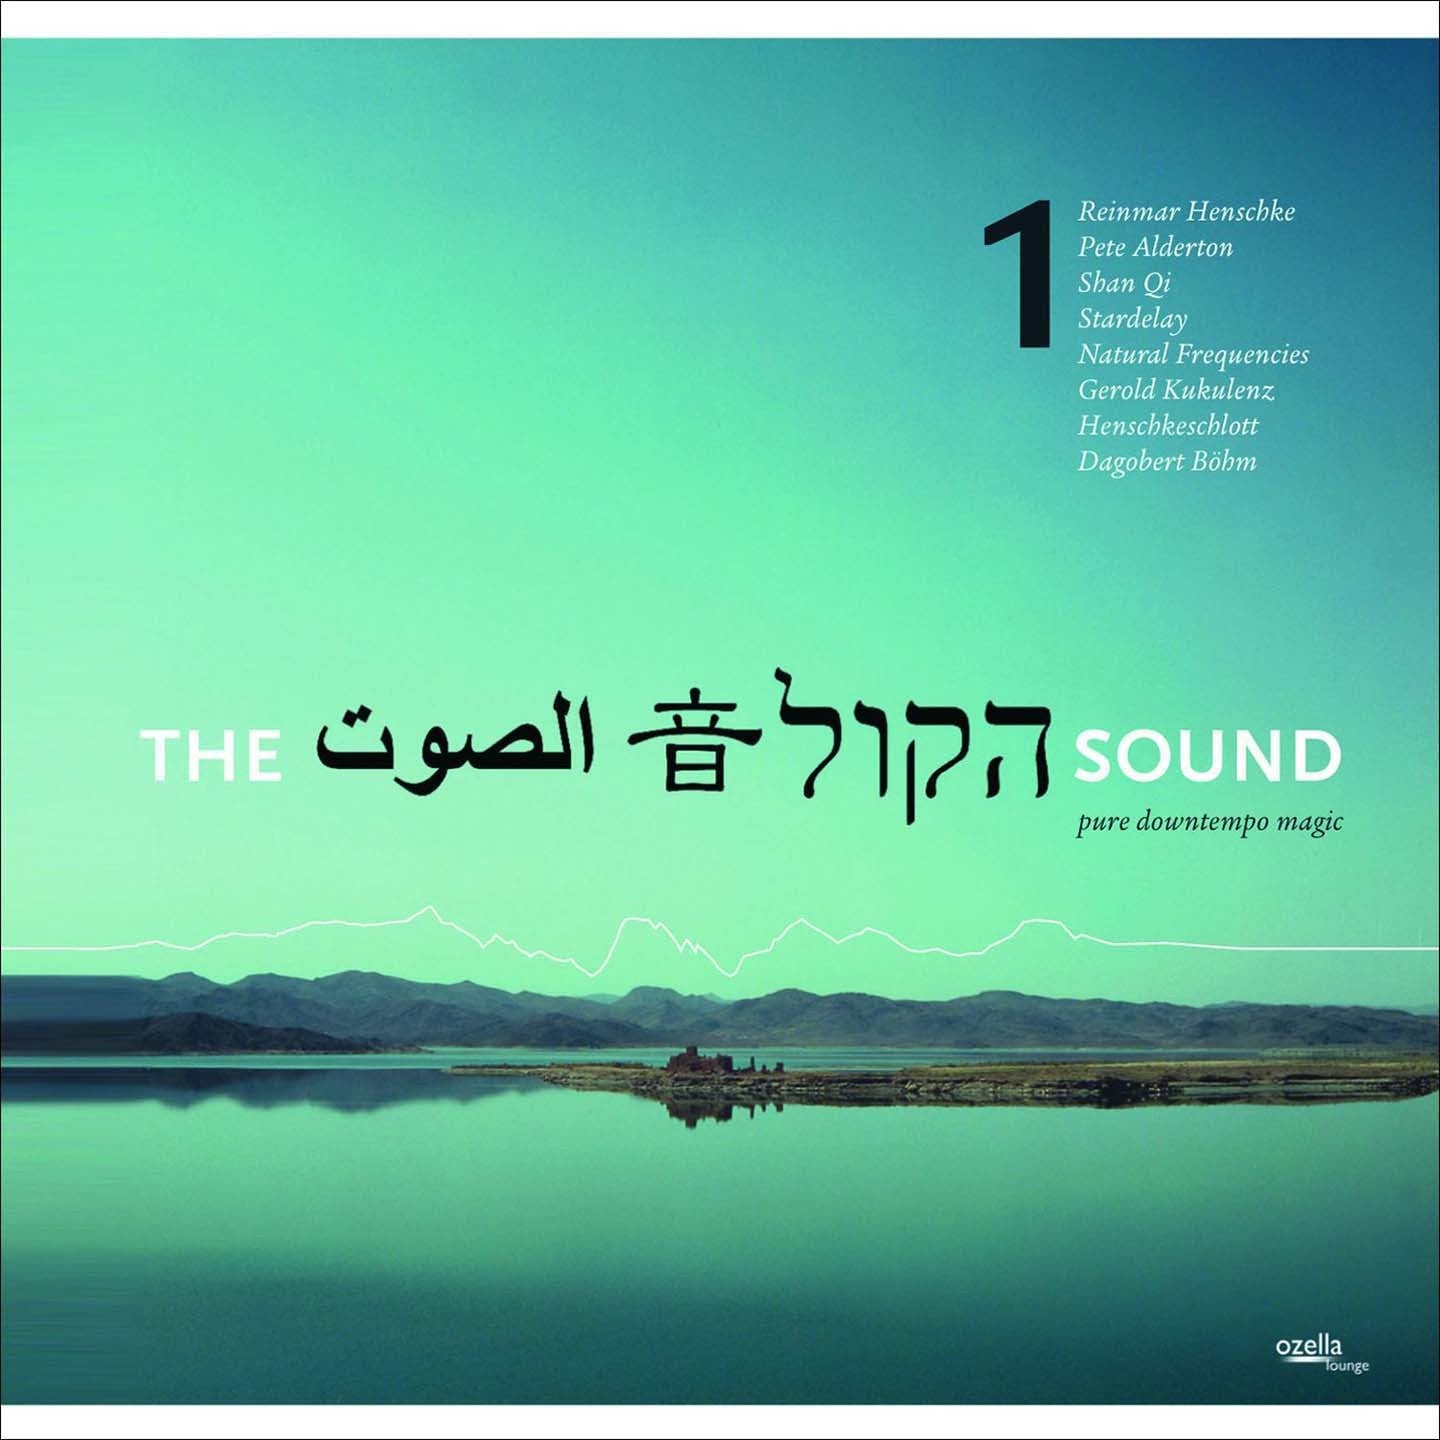 Pochette de : THE SOUND VOL.1 - PURE DOWNTEMPO MAGIC - VARIOUS ARTISTS (CD)